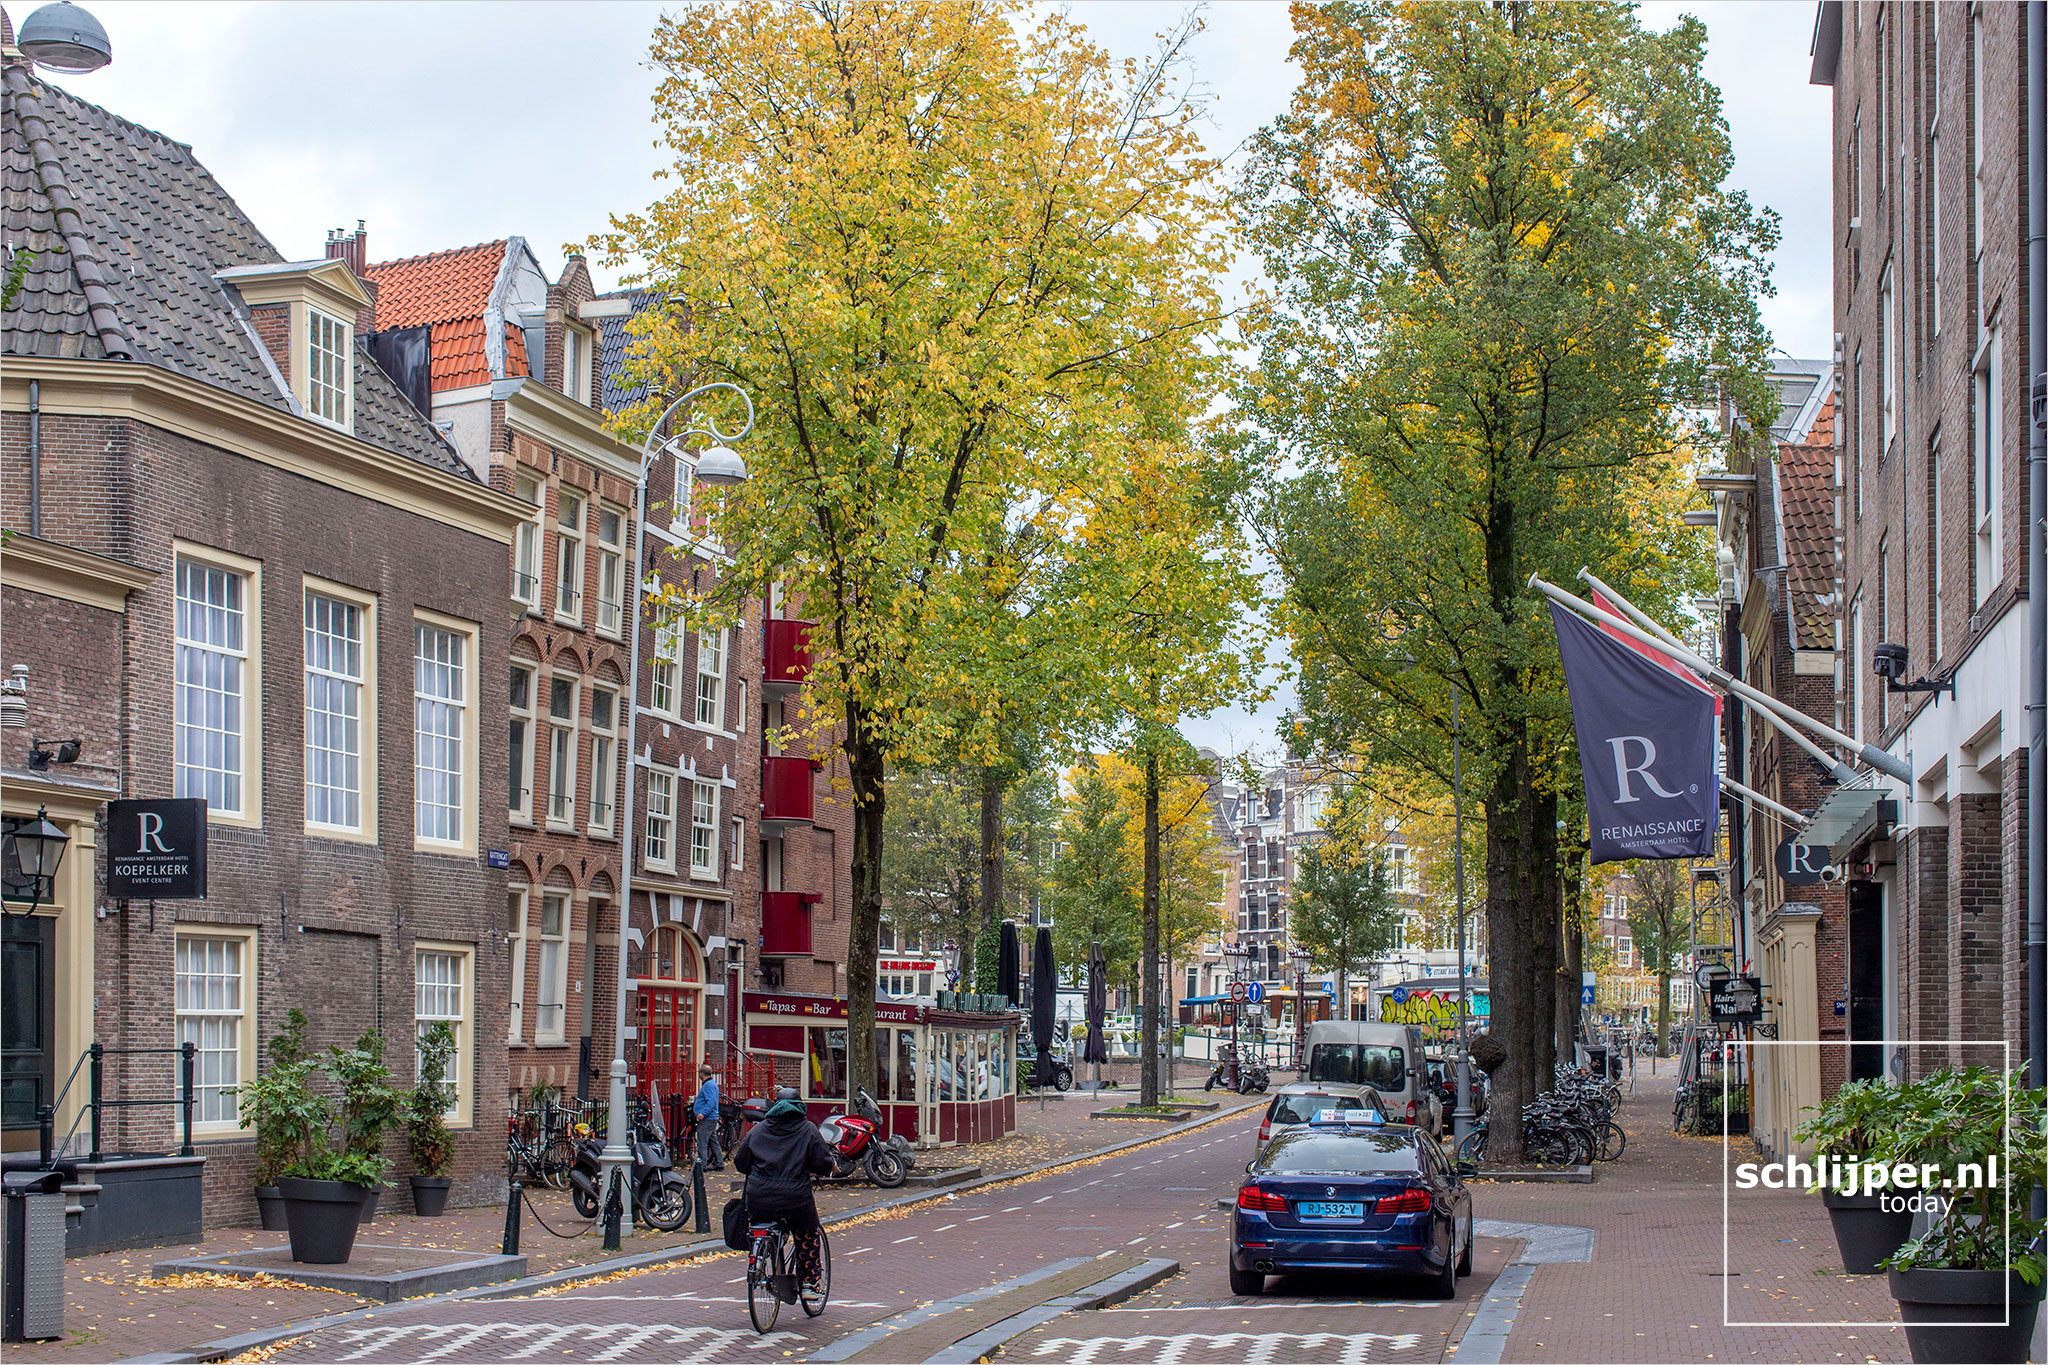 Nederland, Amsterdam, 26 oktober 2020